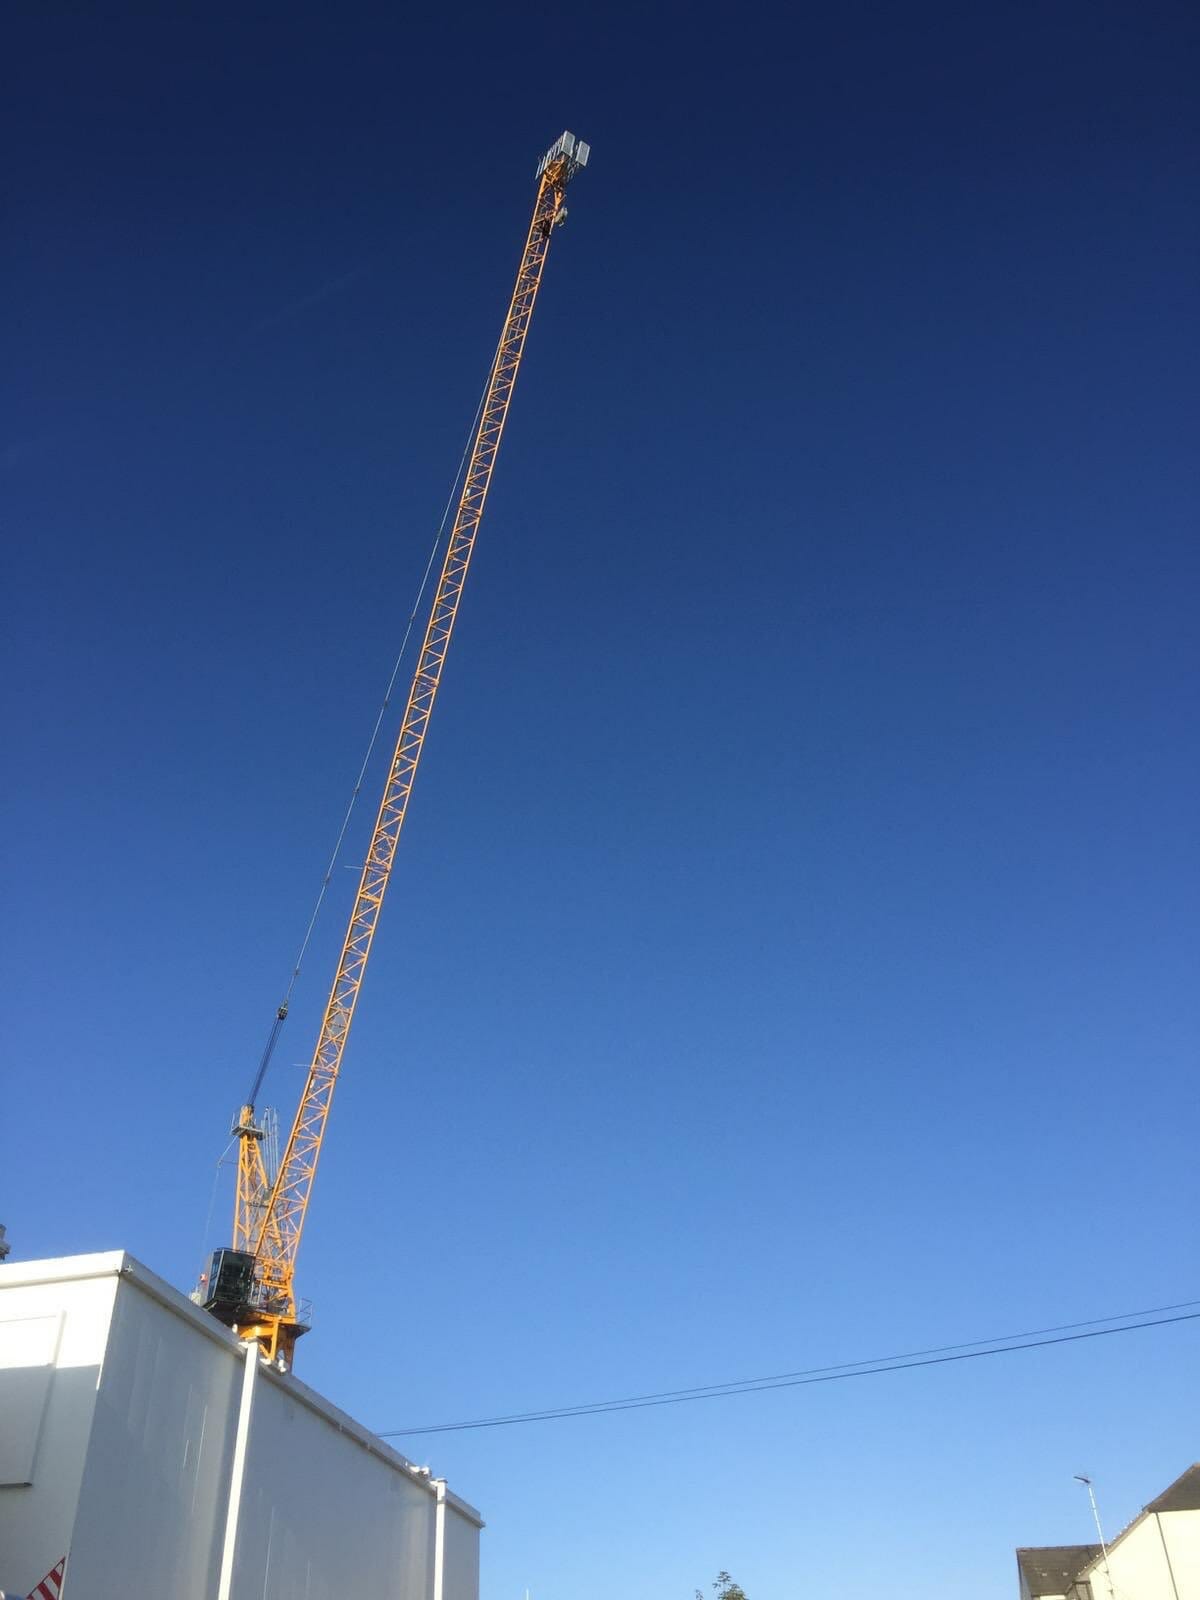 NEWS | Man climbs crane in Hereford